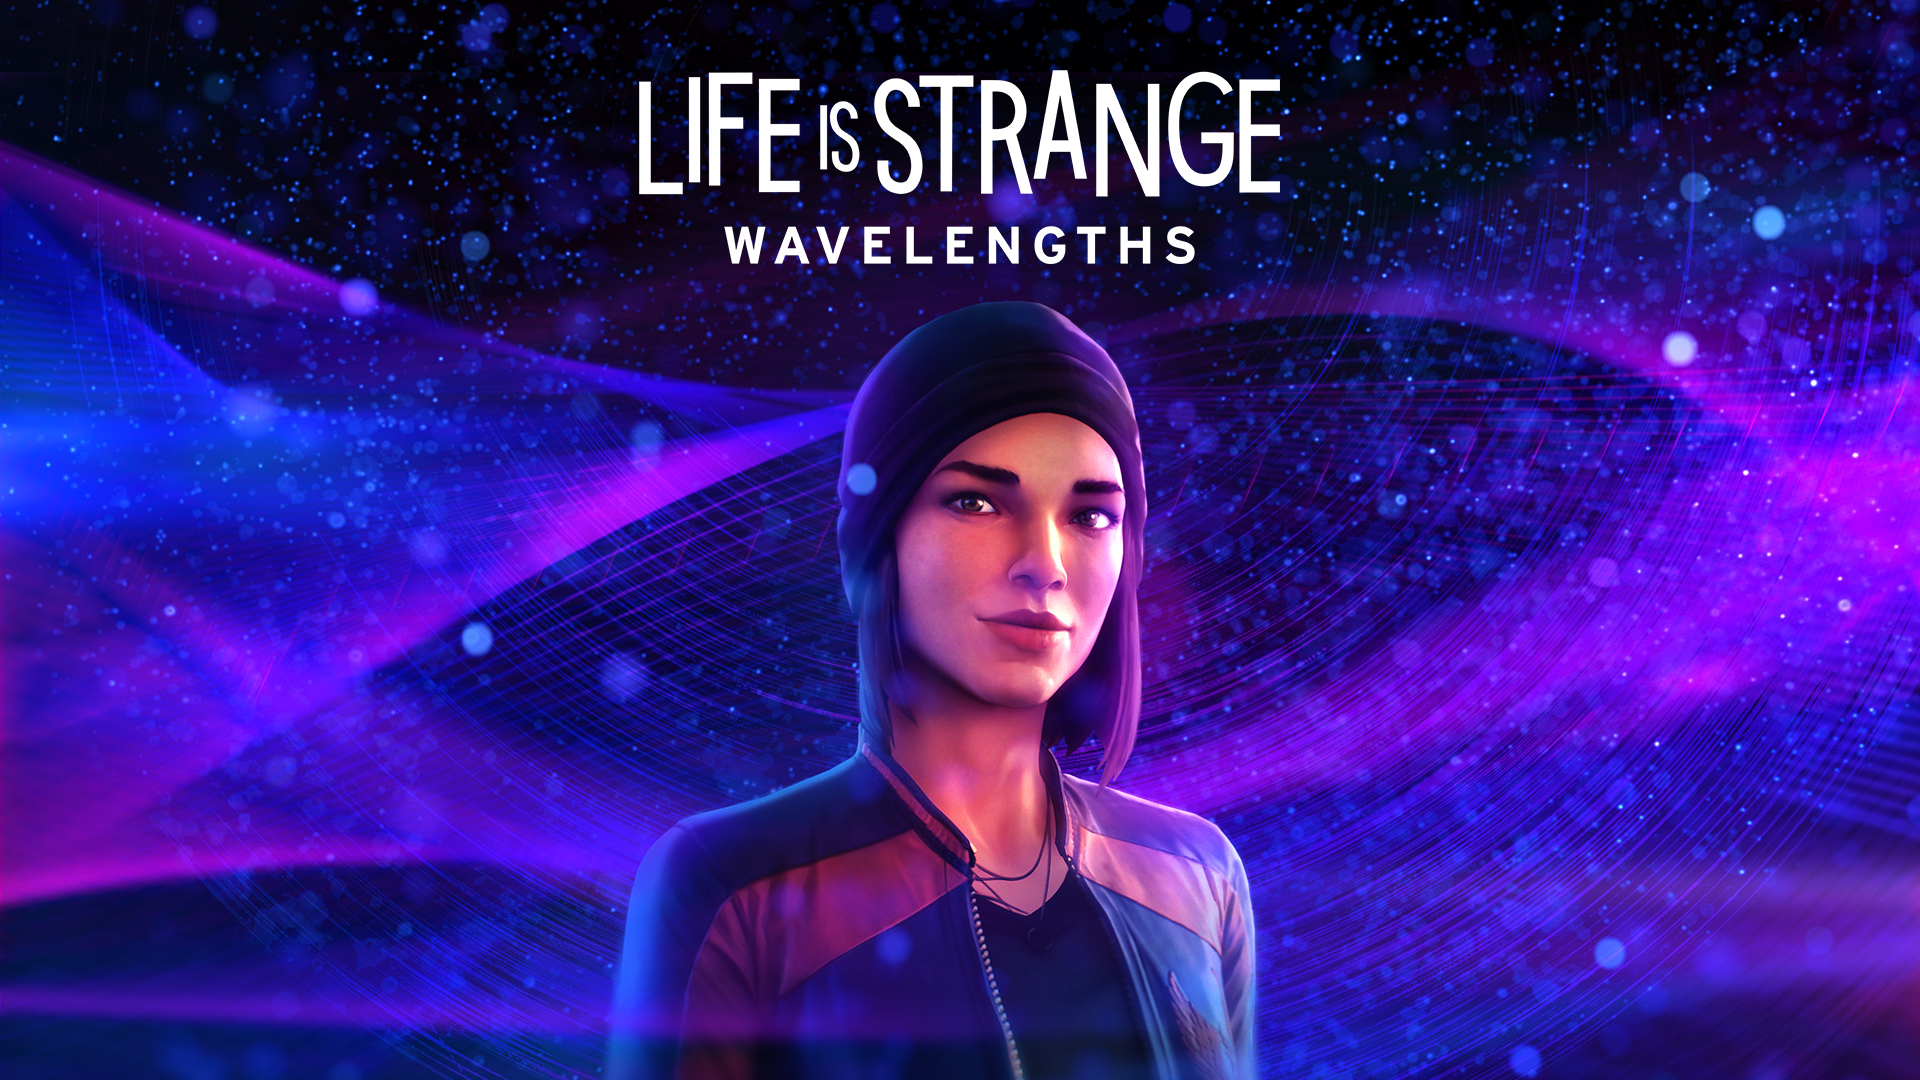 Life is Strange: Wavelengths